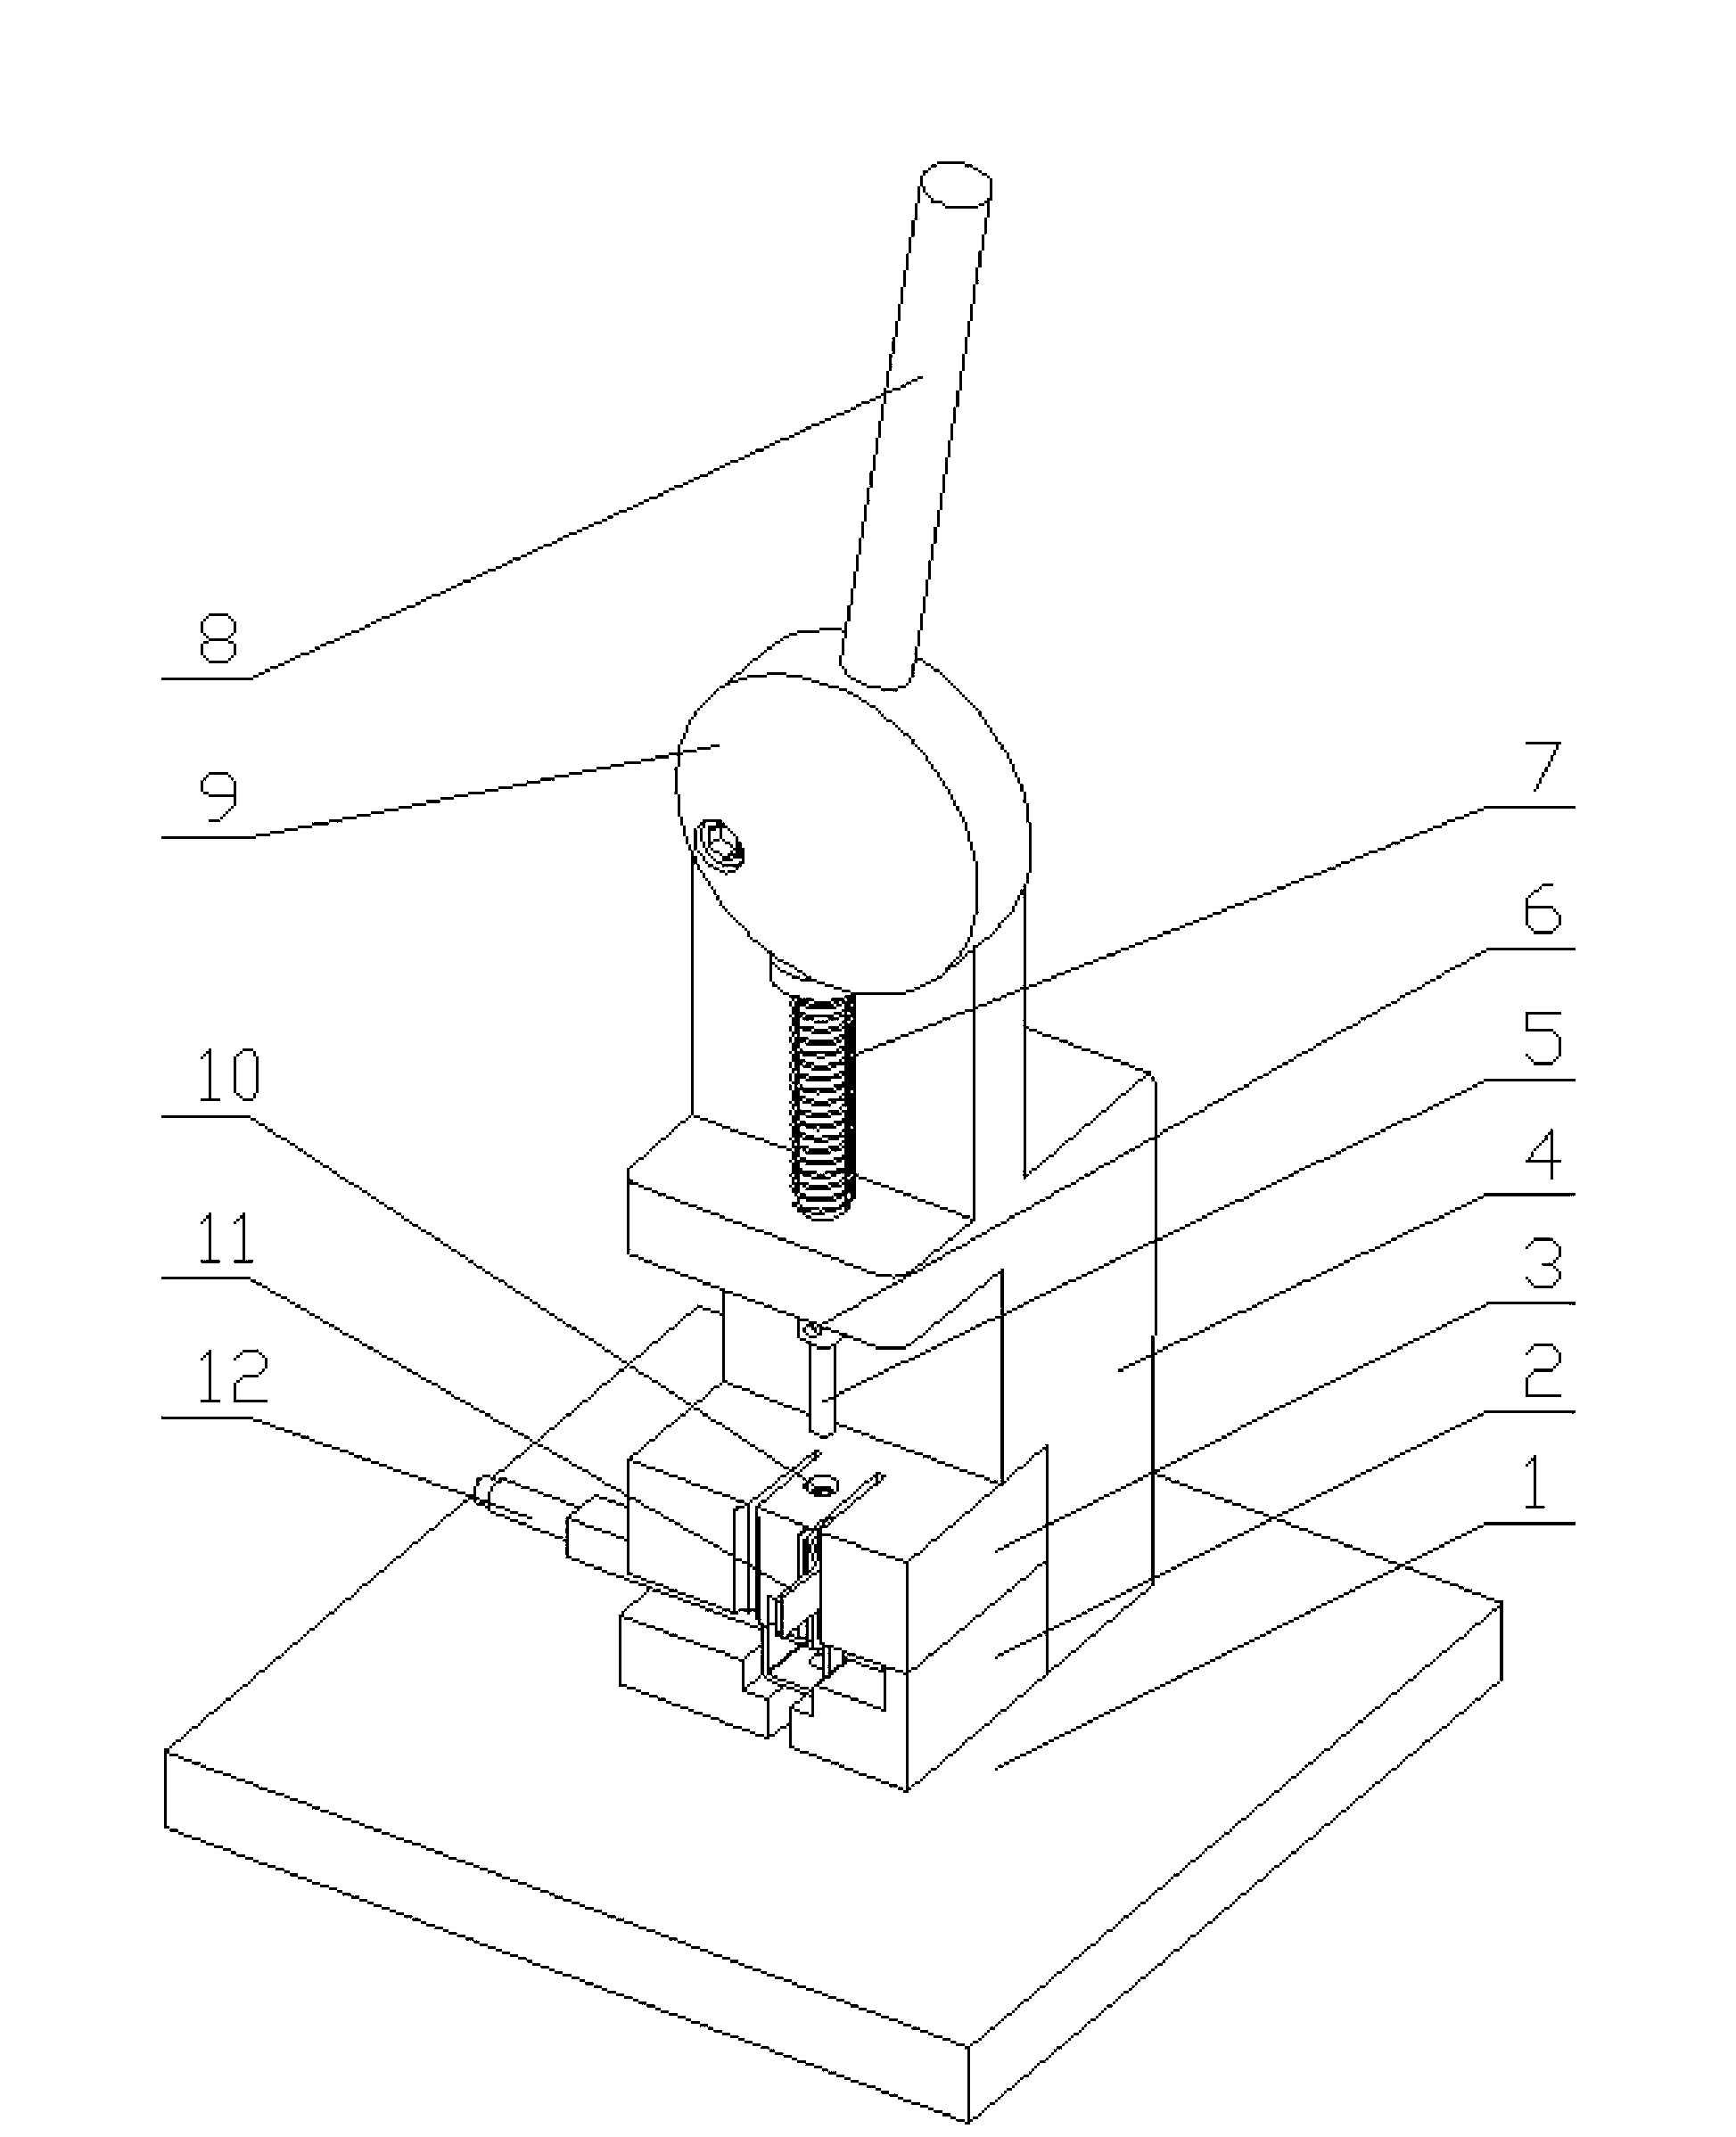 Spring pin assembling clamp